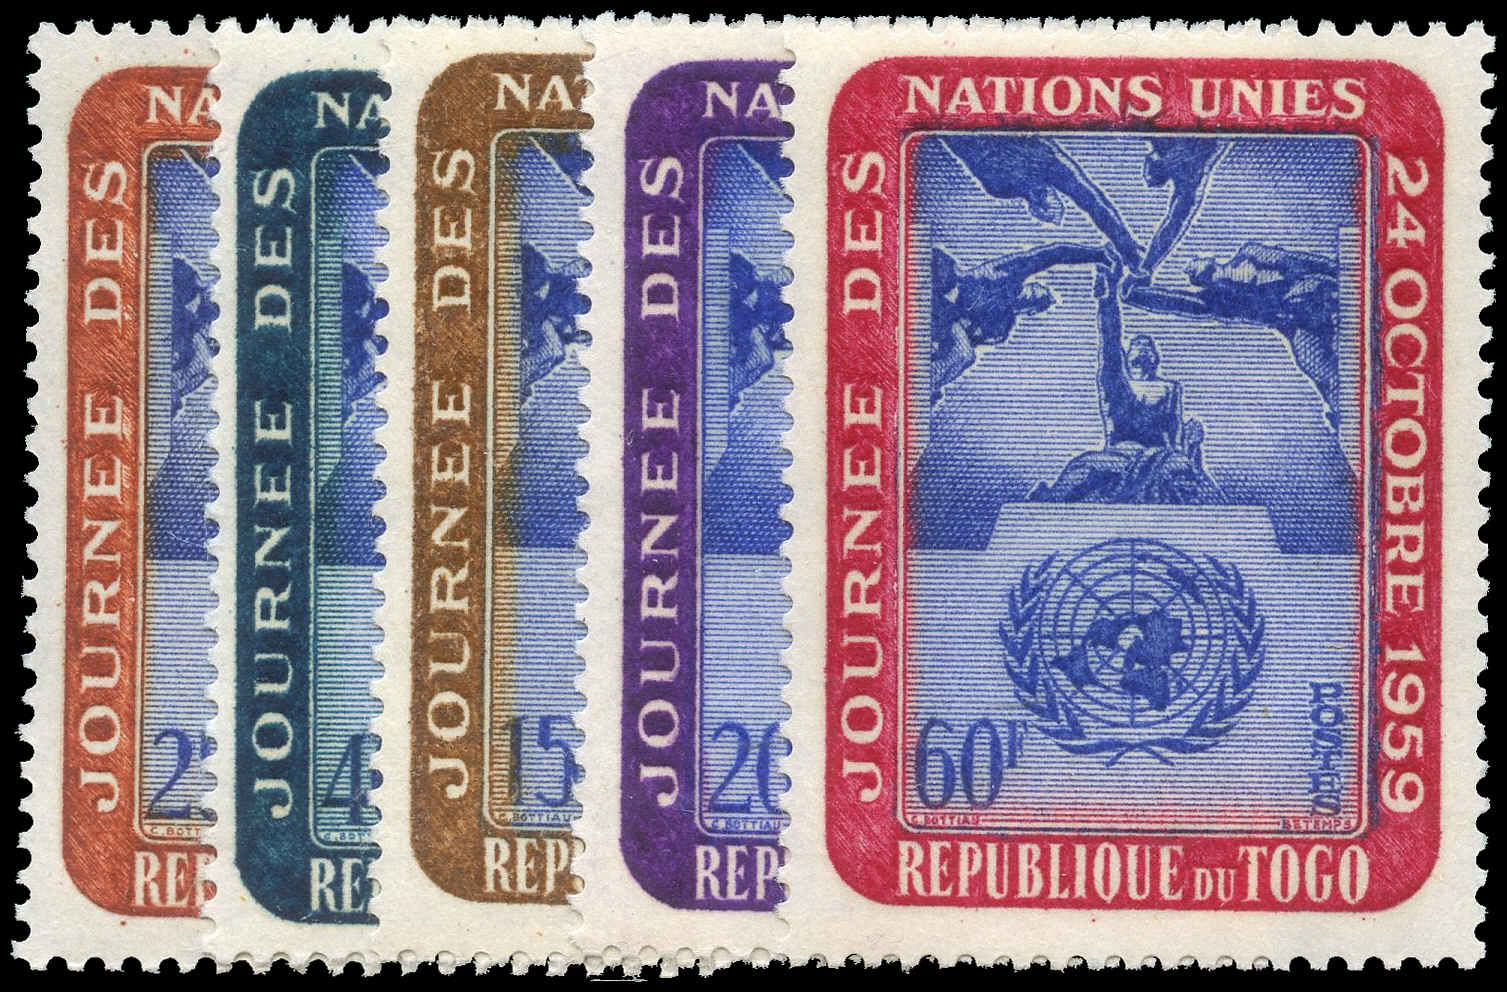 https://www.arpinphilately.com/system/sources/28378/original/togo-stamp-364-8-five-continents-ceiling-painting-palais-des-nations-geneva-1959.jpg